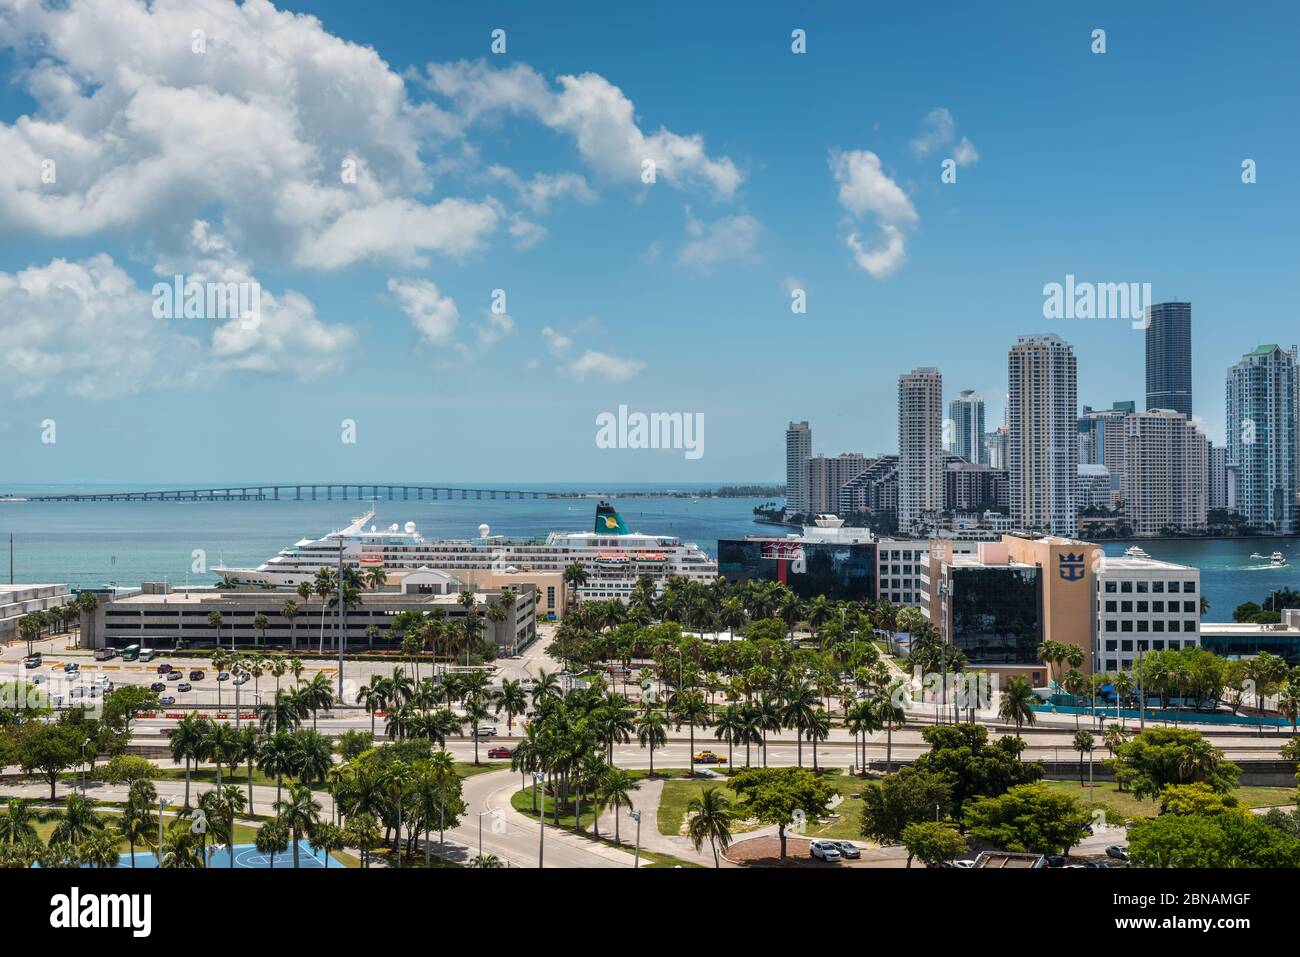 Miami Fl Usa February 15 2019 Stock Photo 1317606335